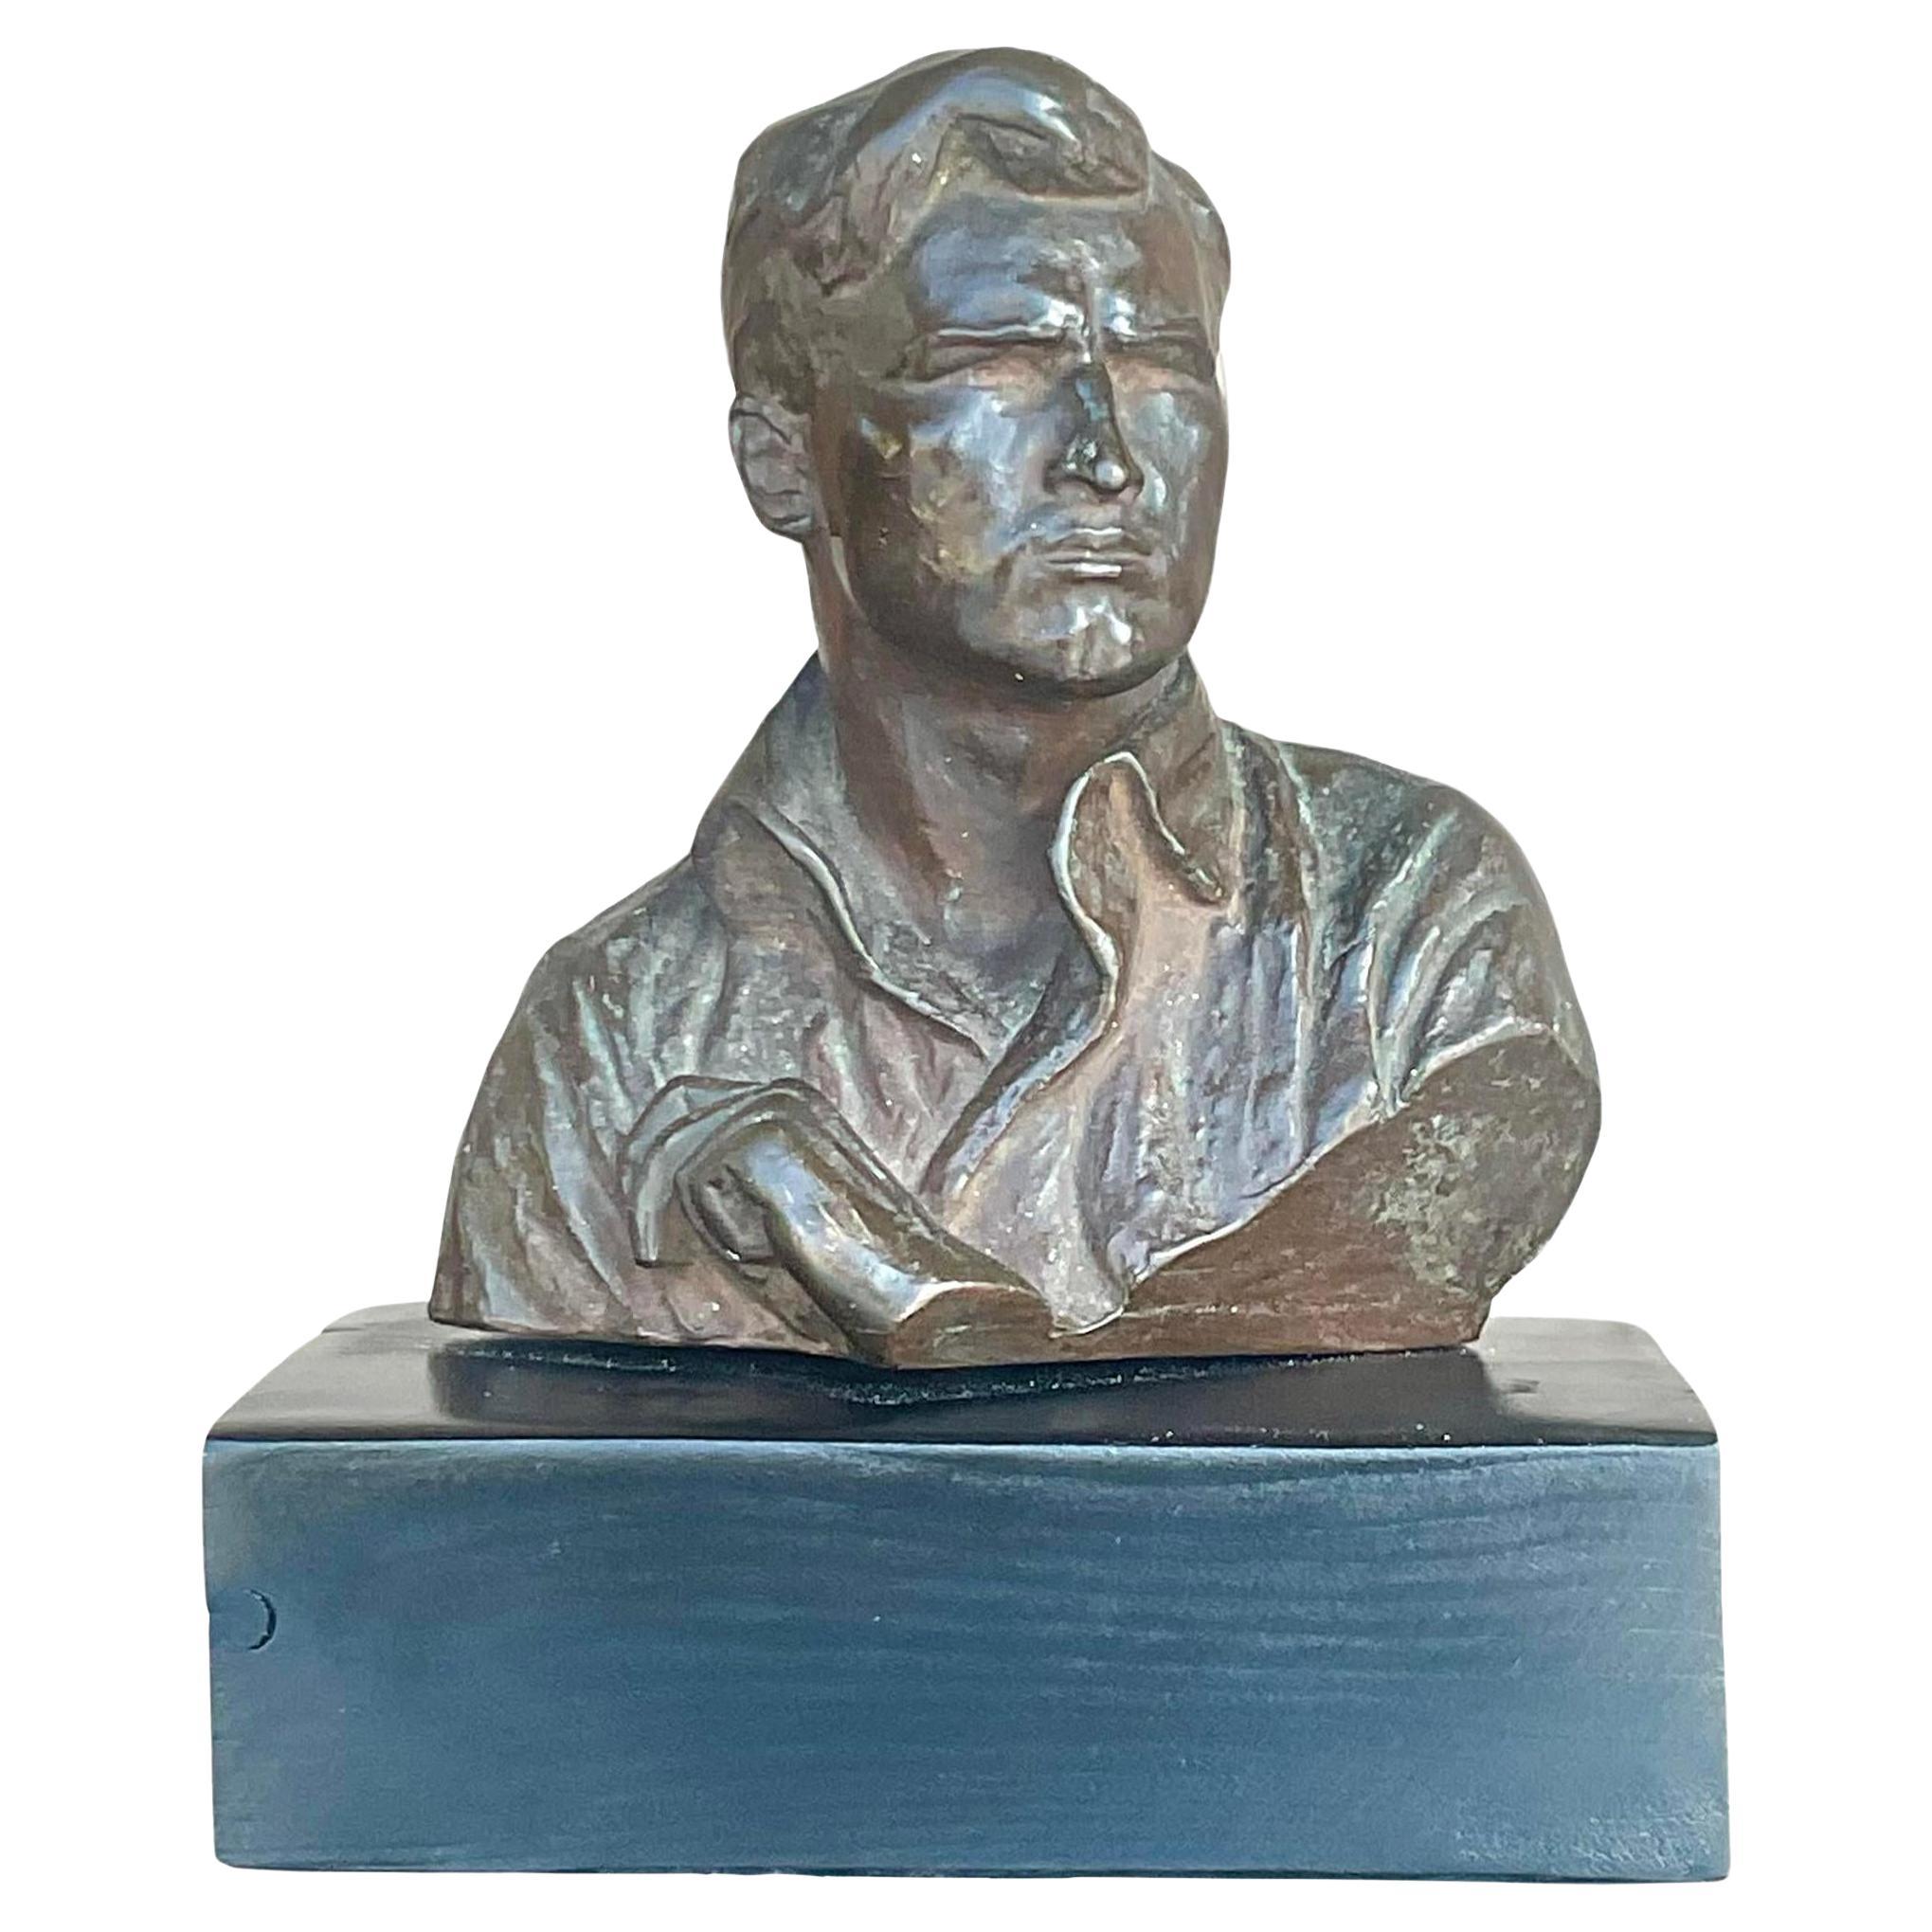 Vintage Figurative Patinated Signed Plaster Bust of Man Sculpture